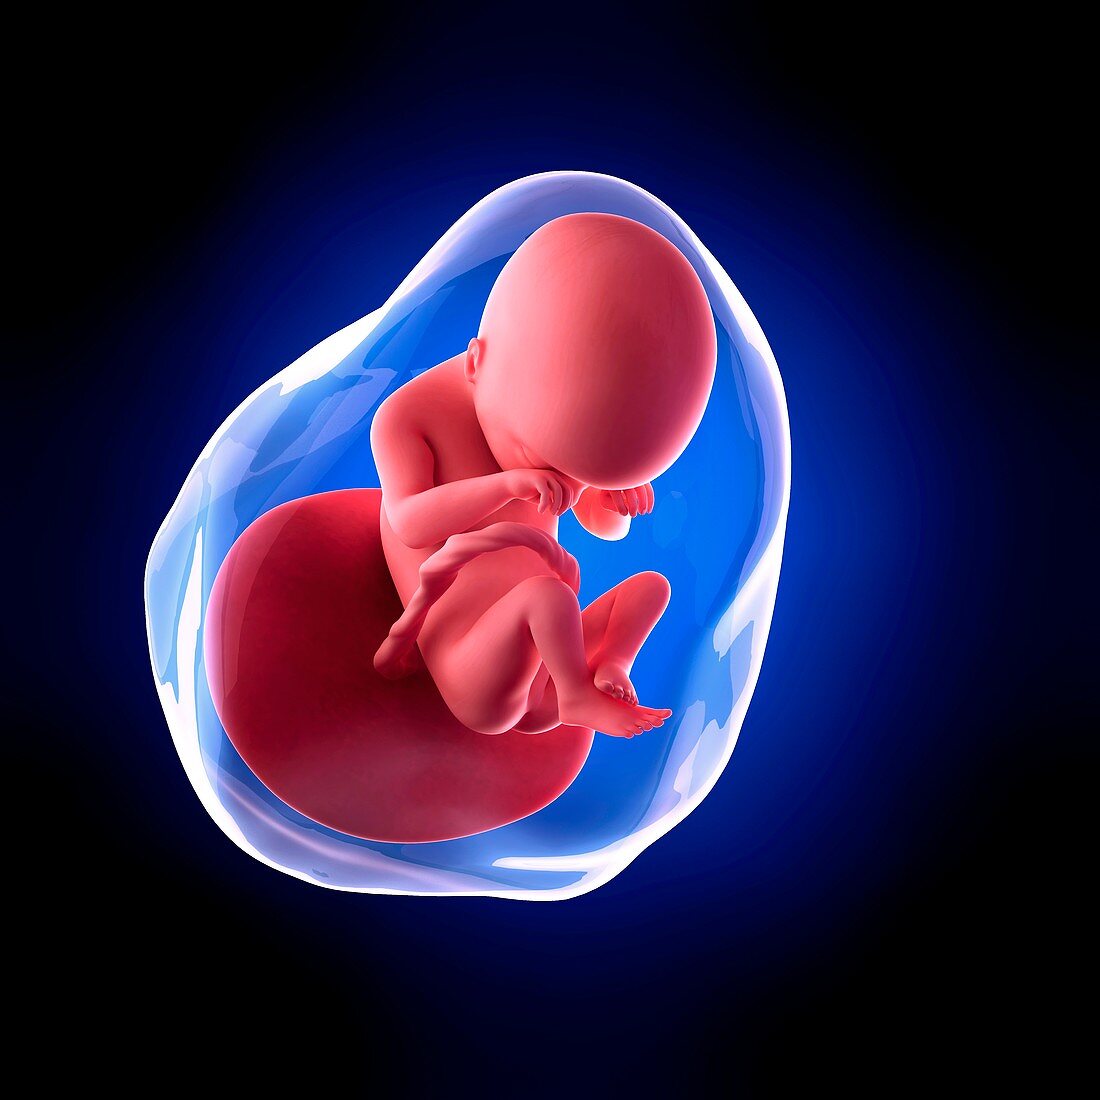 Human fetus age 19 weeks